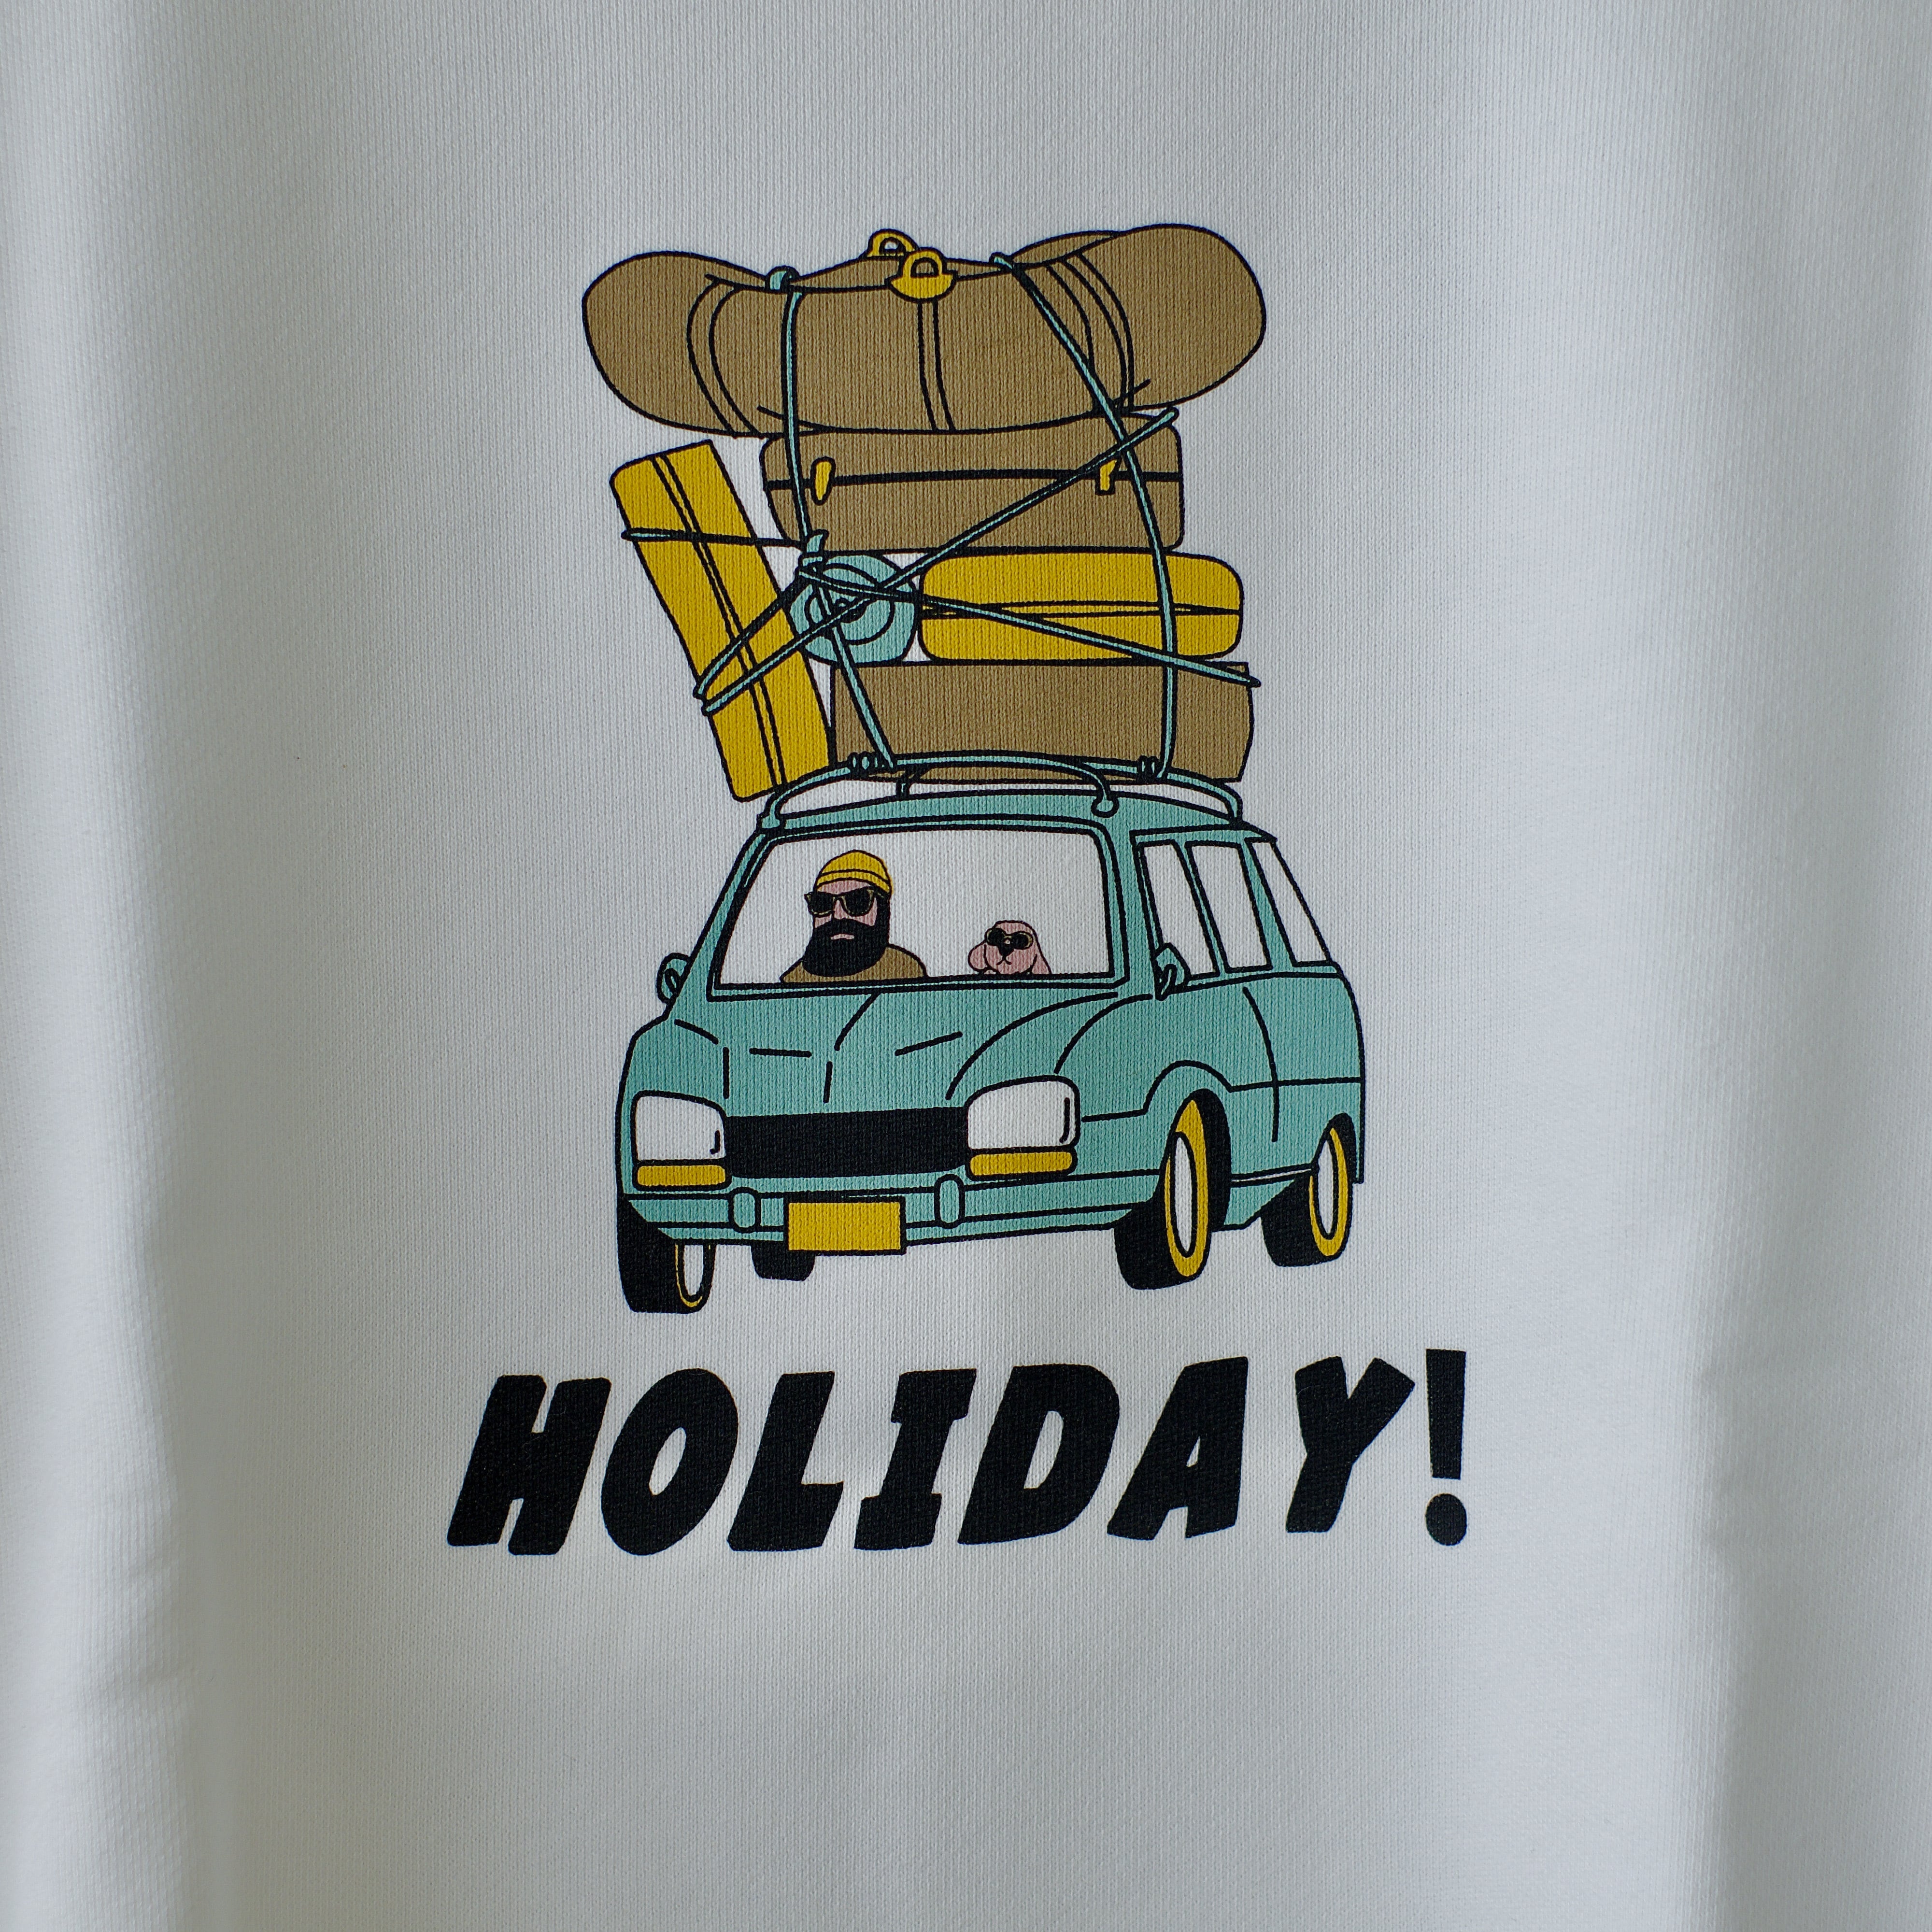 modem design】HOLIDAY! camp ojisan sweat (white) dros dro